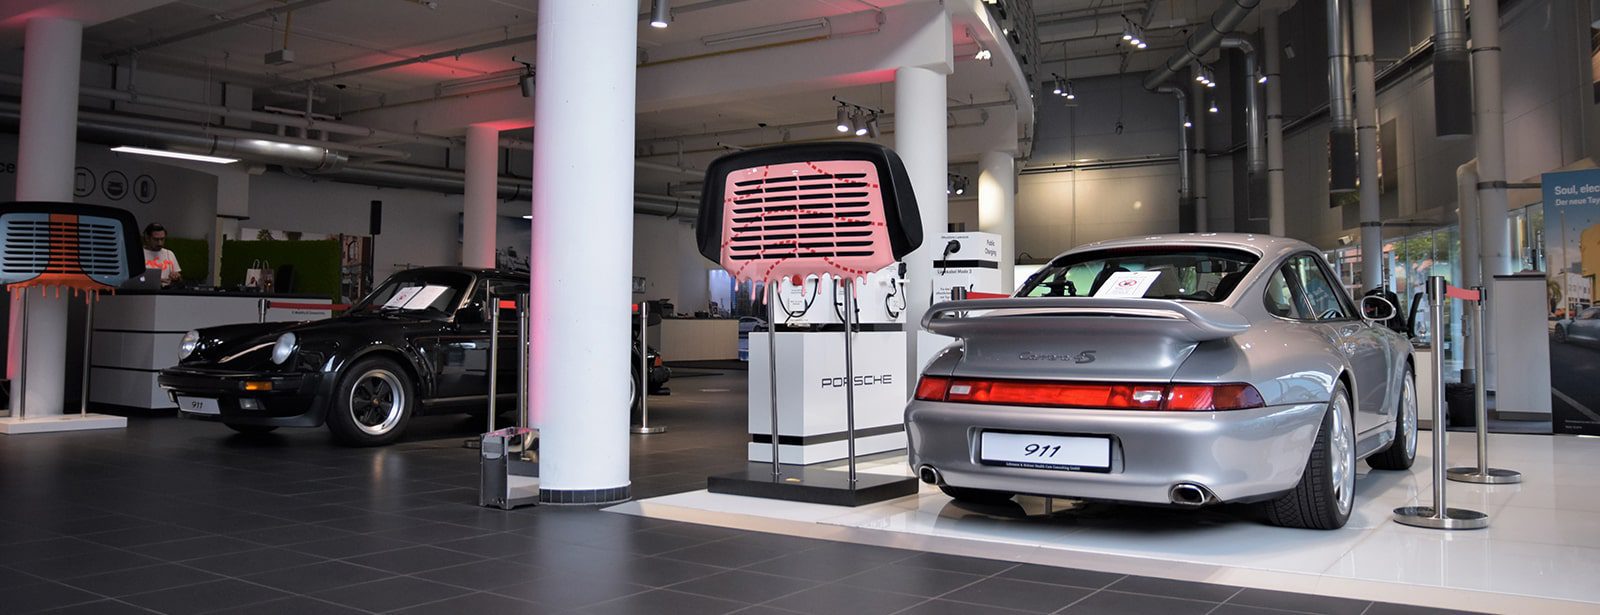 Porsche Center Berlin Mitte